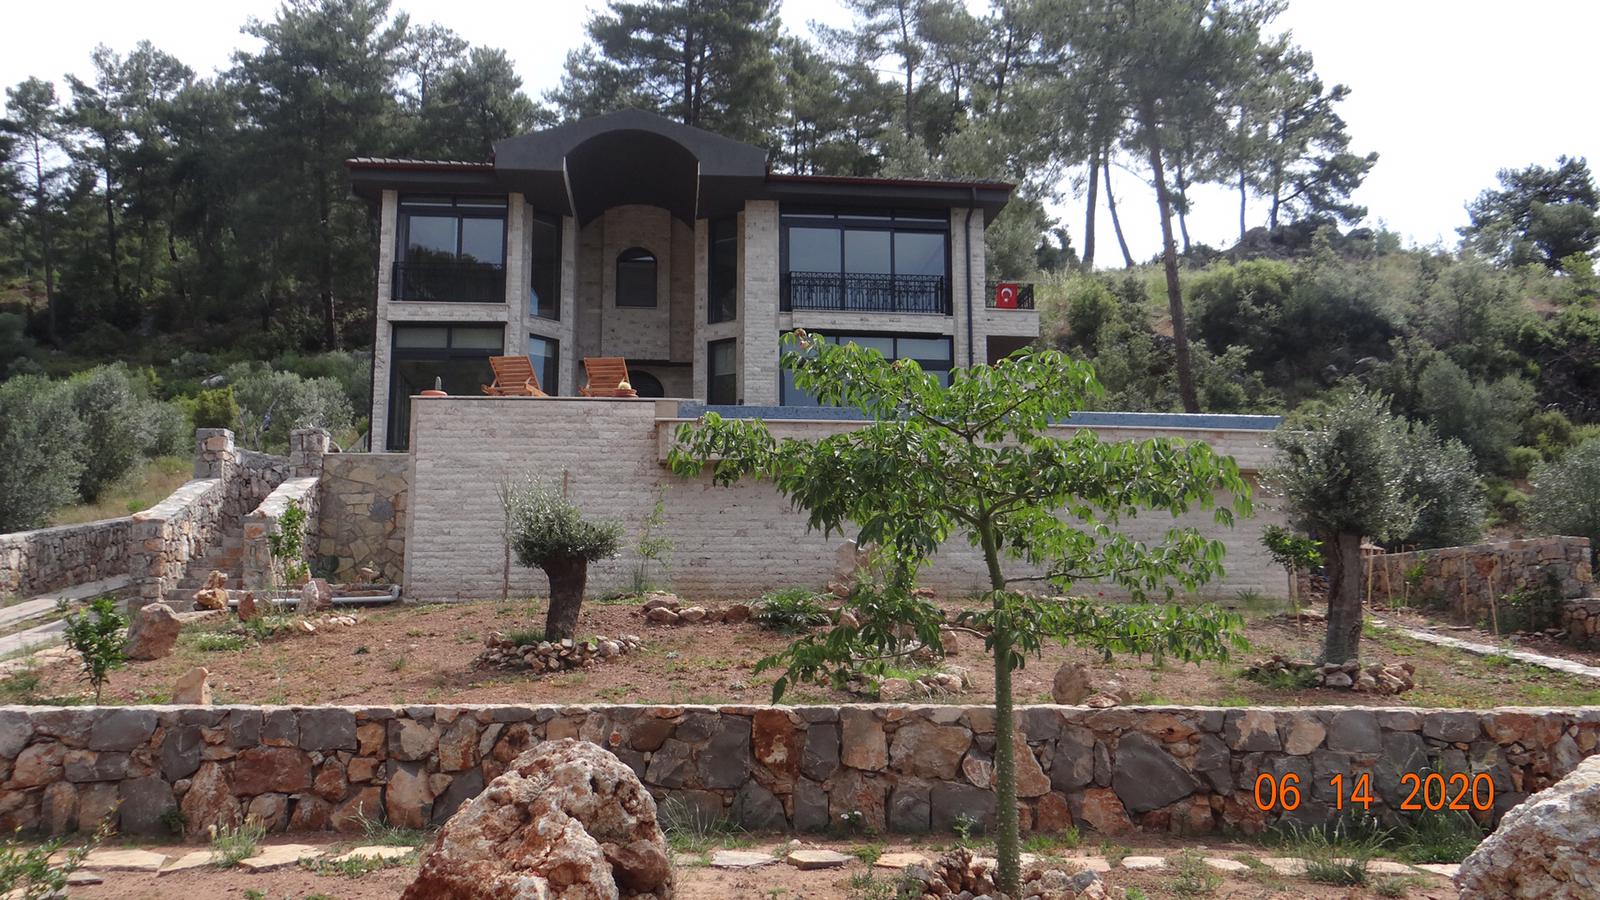 5 Bedrooms Villa for Rent in Gocek Gokceovacık District